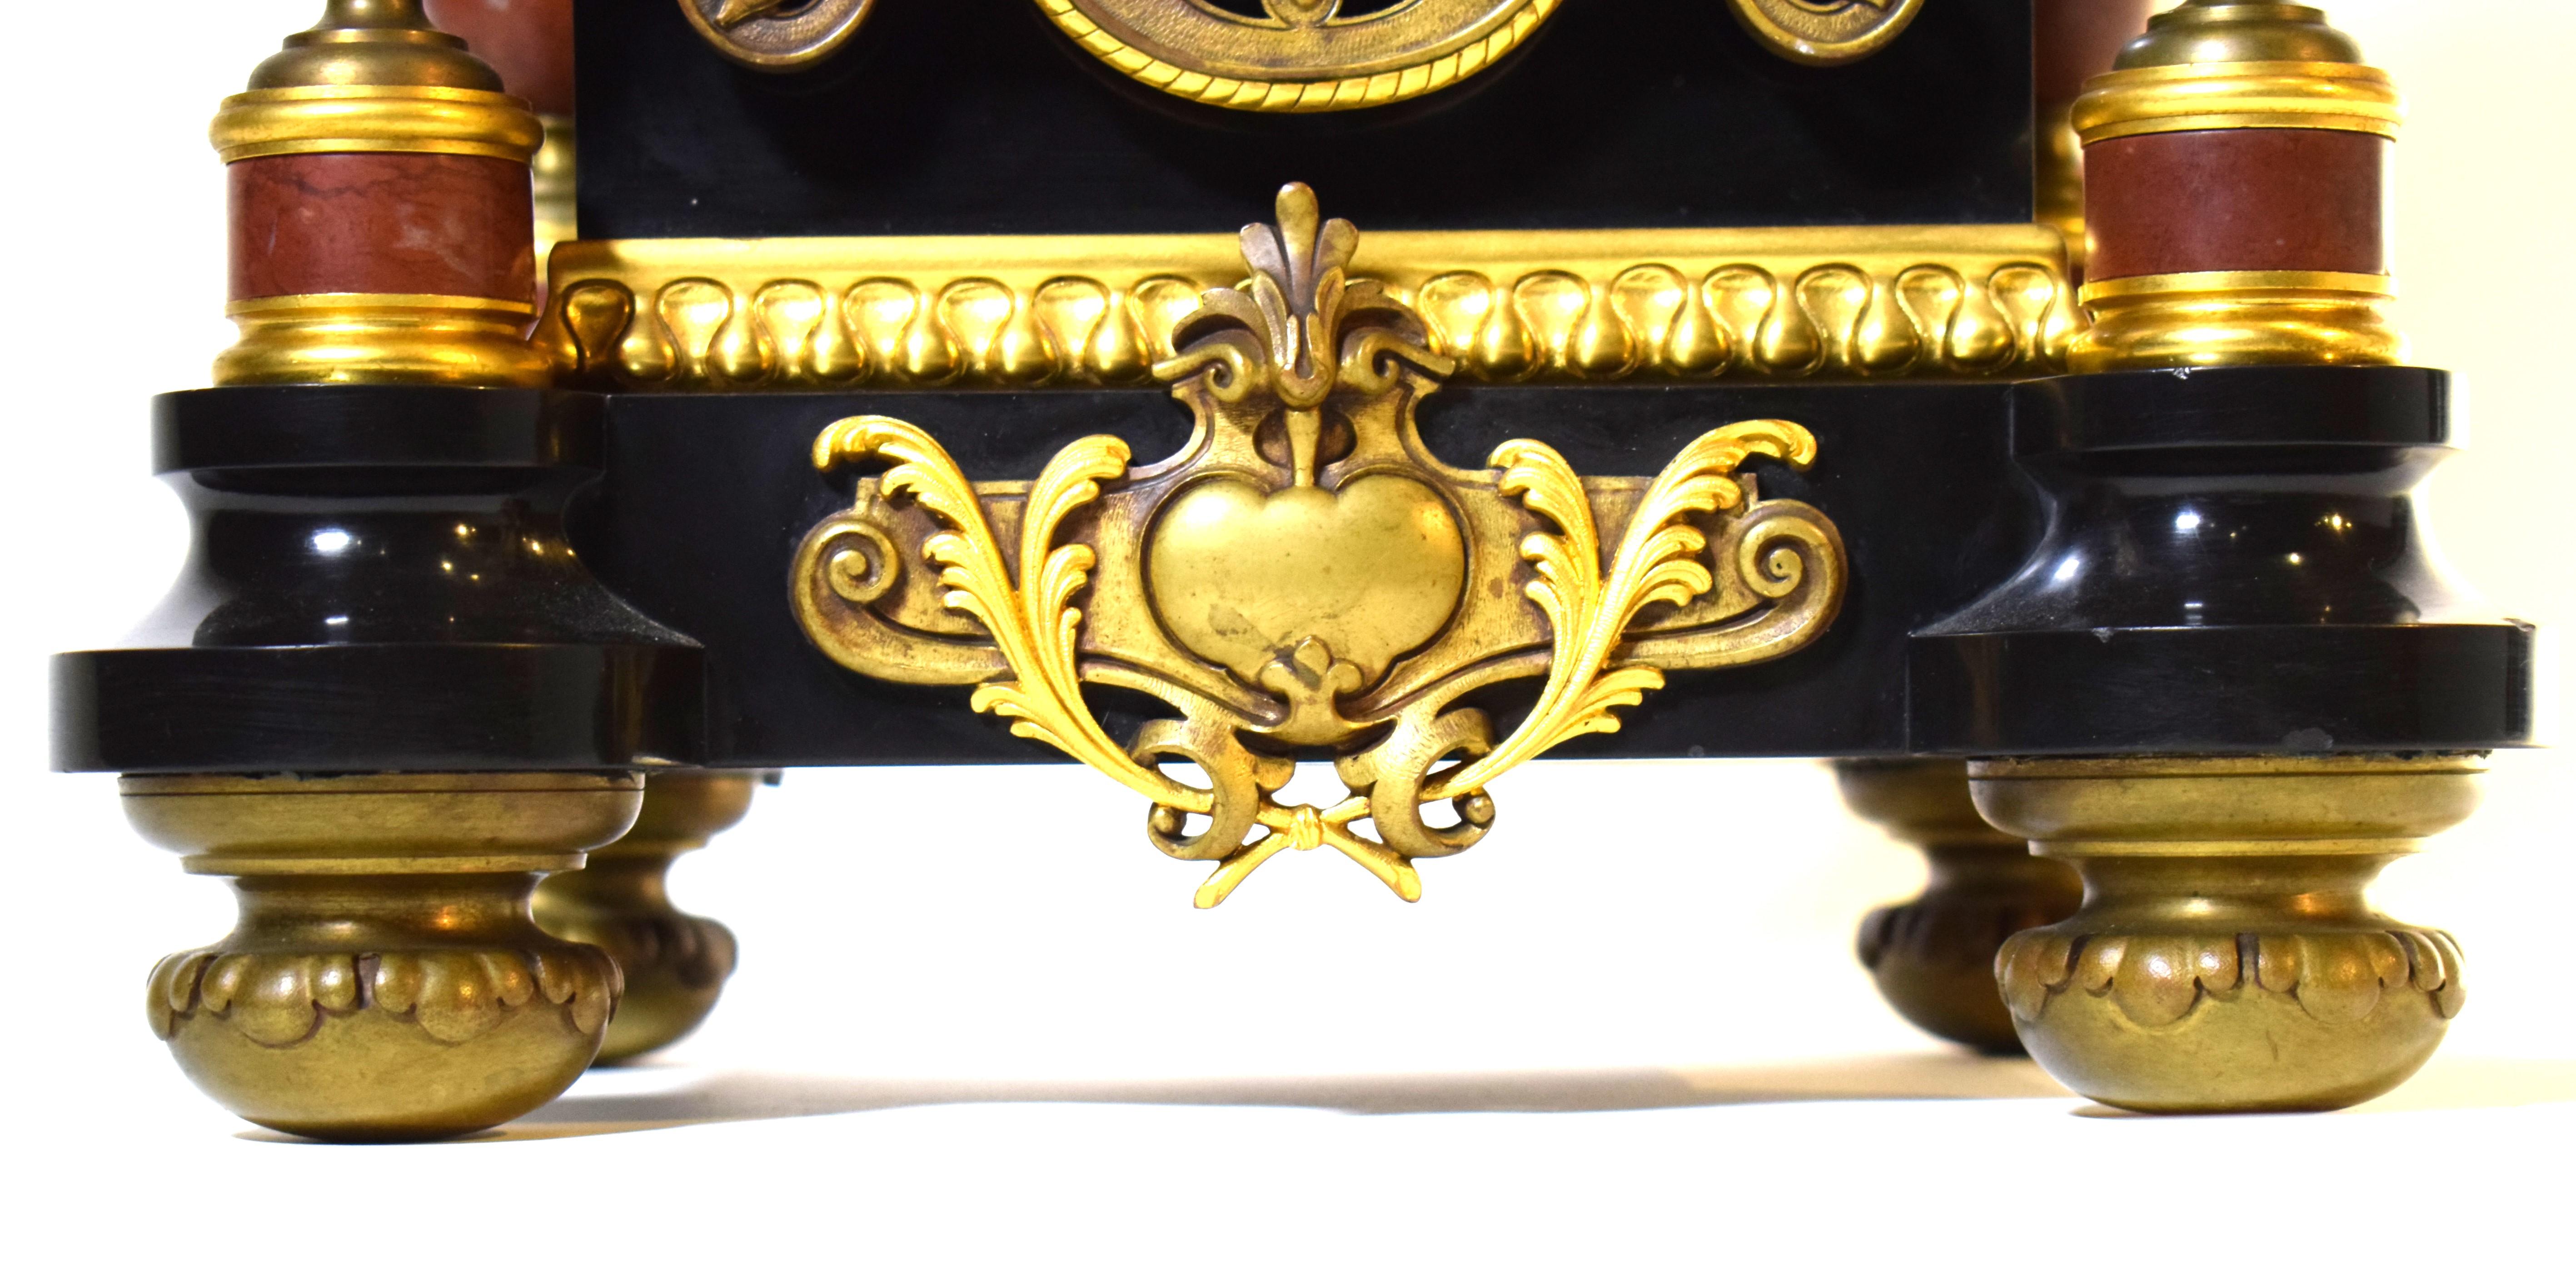 Partial vergoldete Uhr von Le Roy & Fils im Barockstil, Revival im Angebot 9